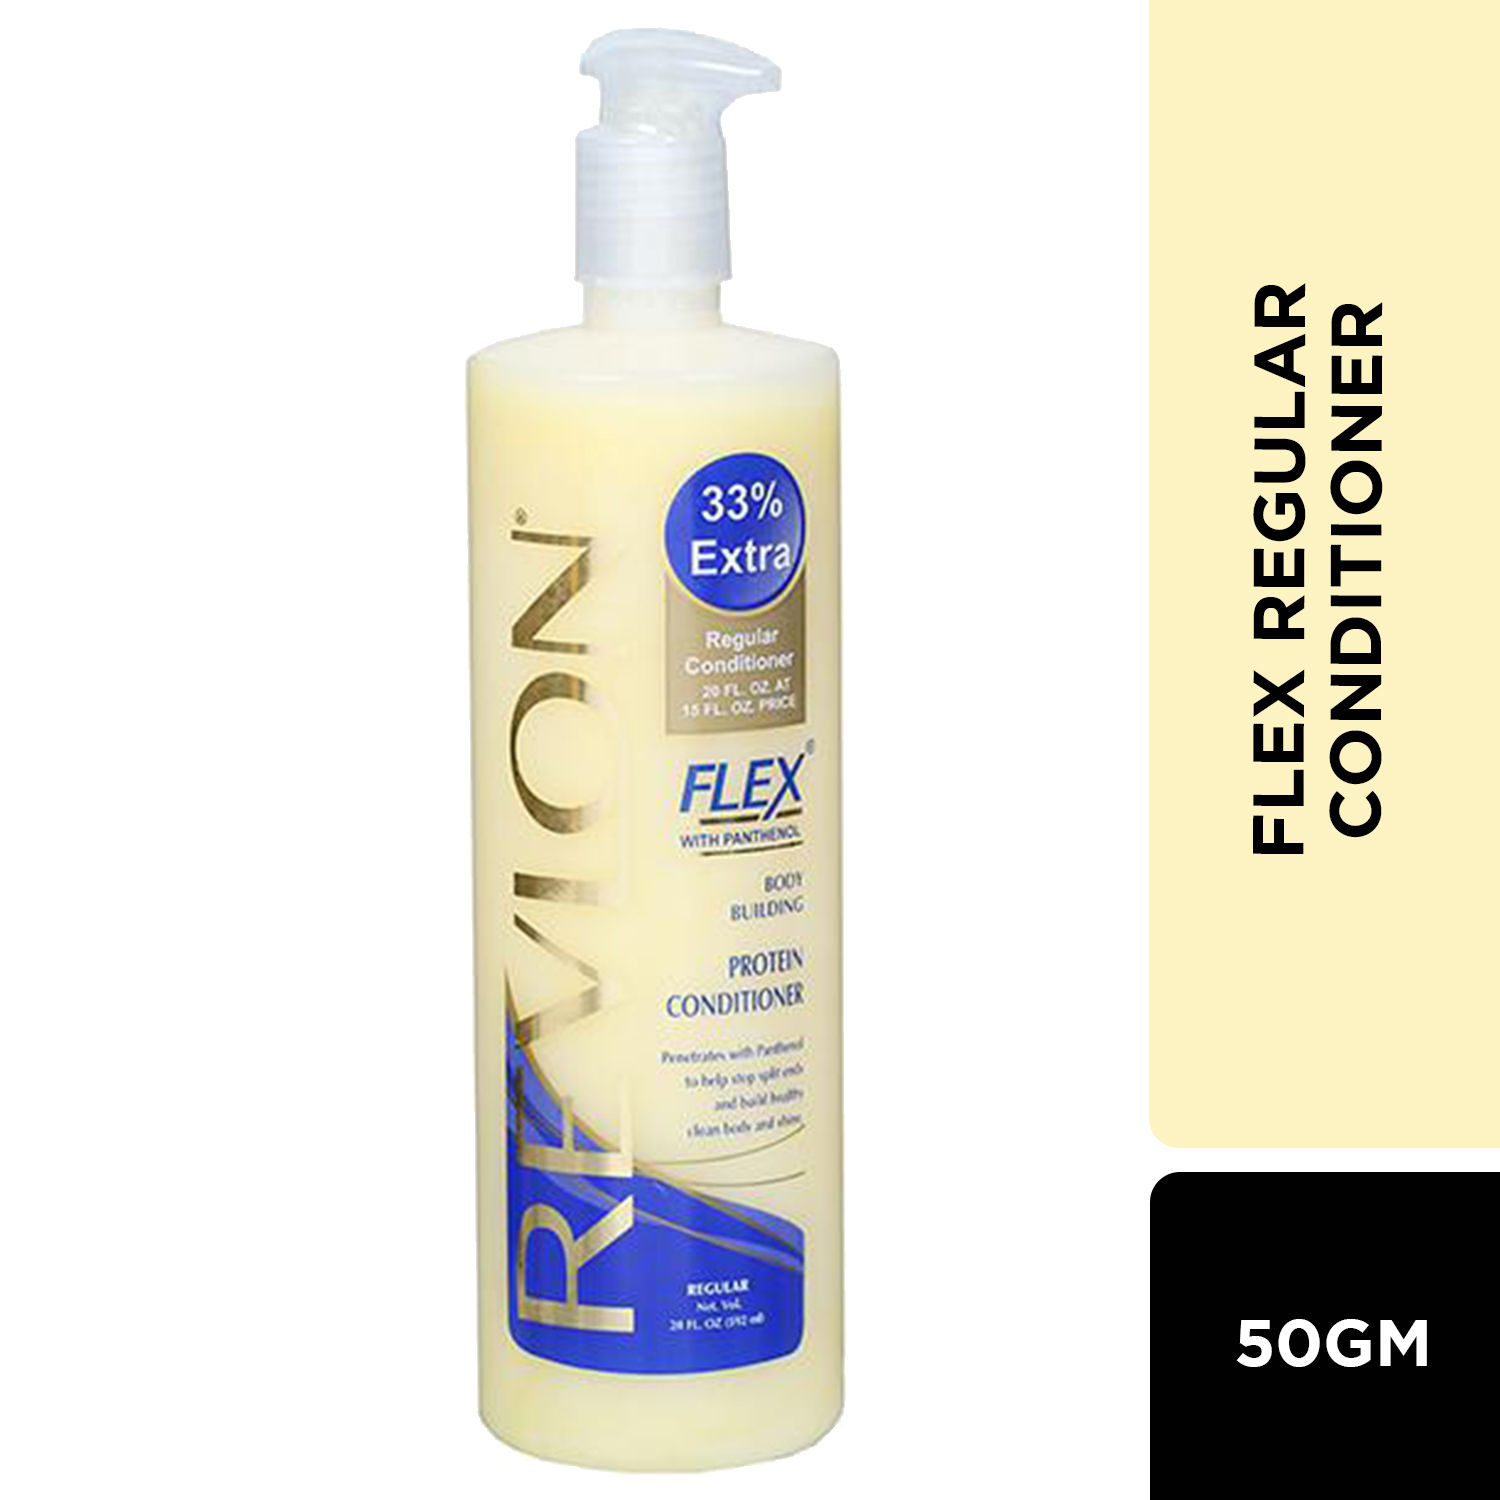 Buy Revlon Flex Regular Body Building Protein Conditioner 592 ml Rs 31 off on MRP - Purplle